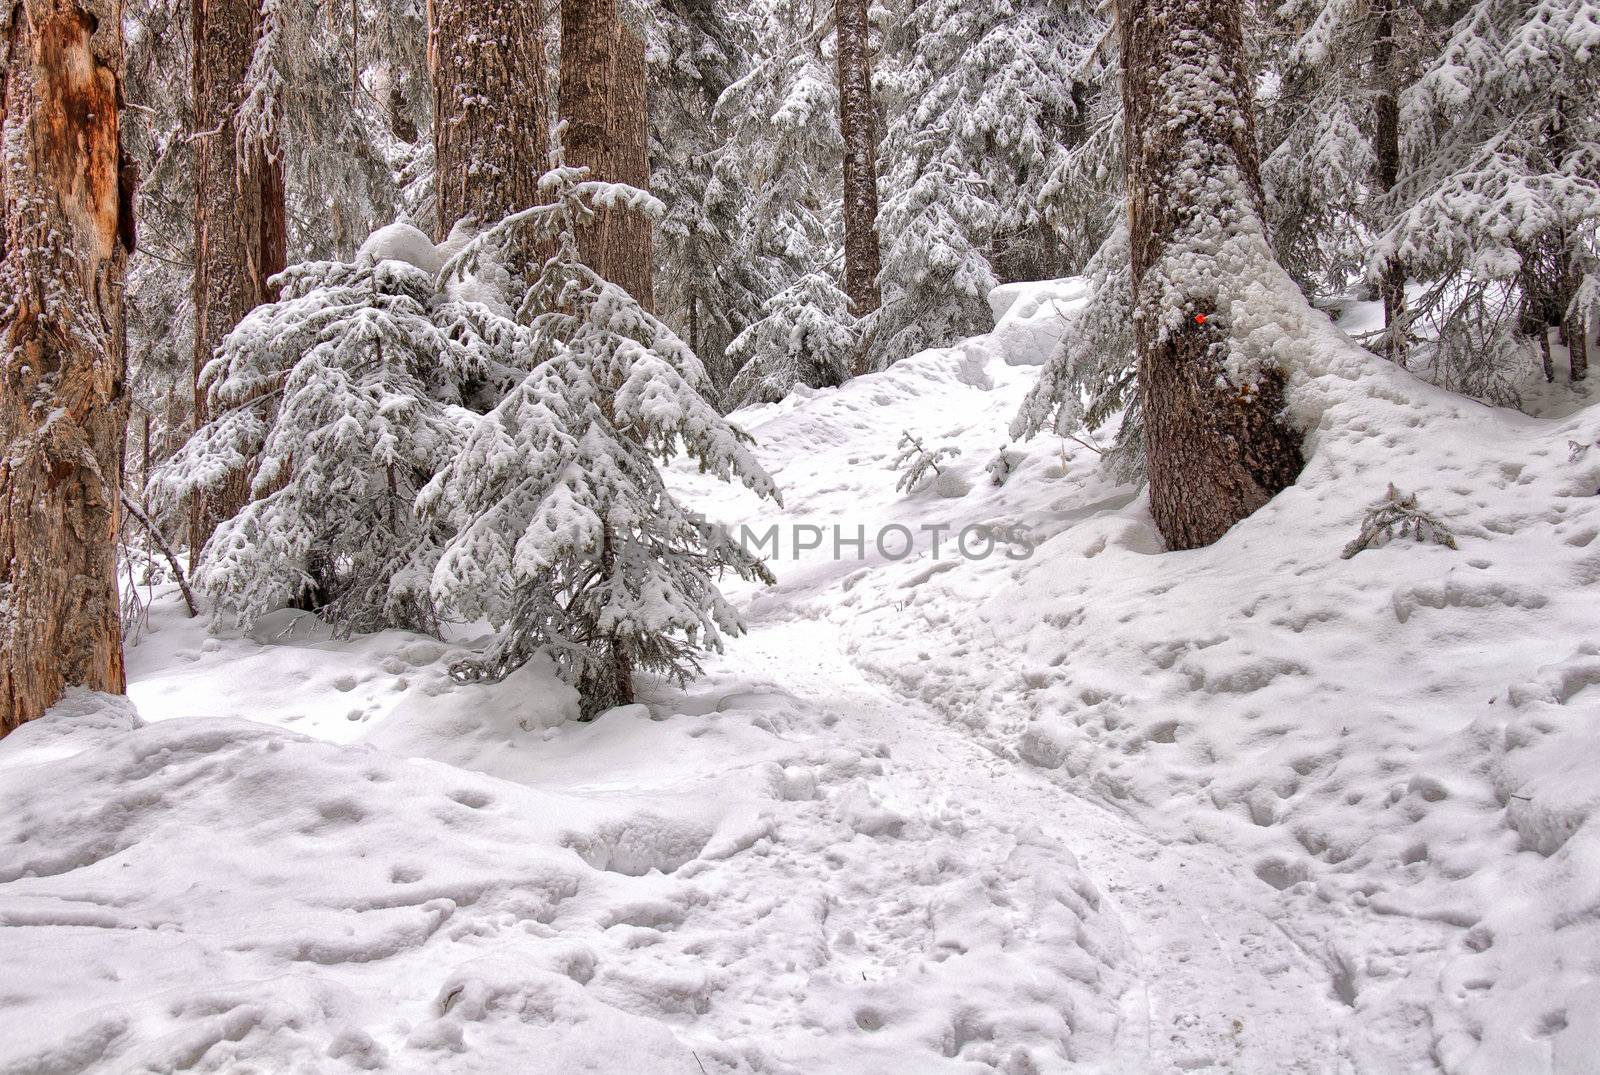 Snowshoe Trail Through the Trees by JamesWheeler